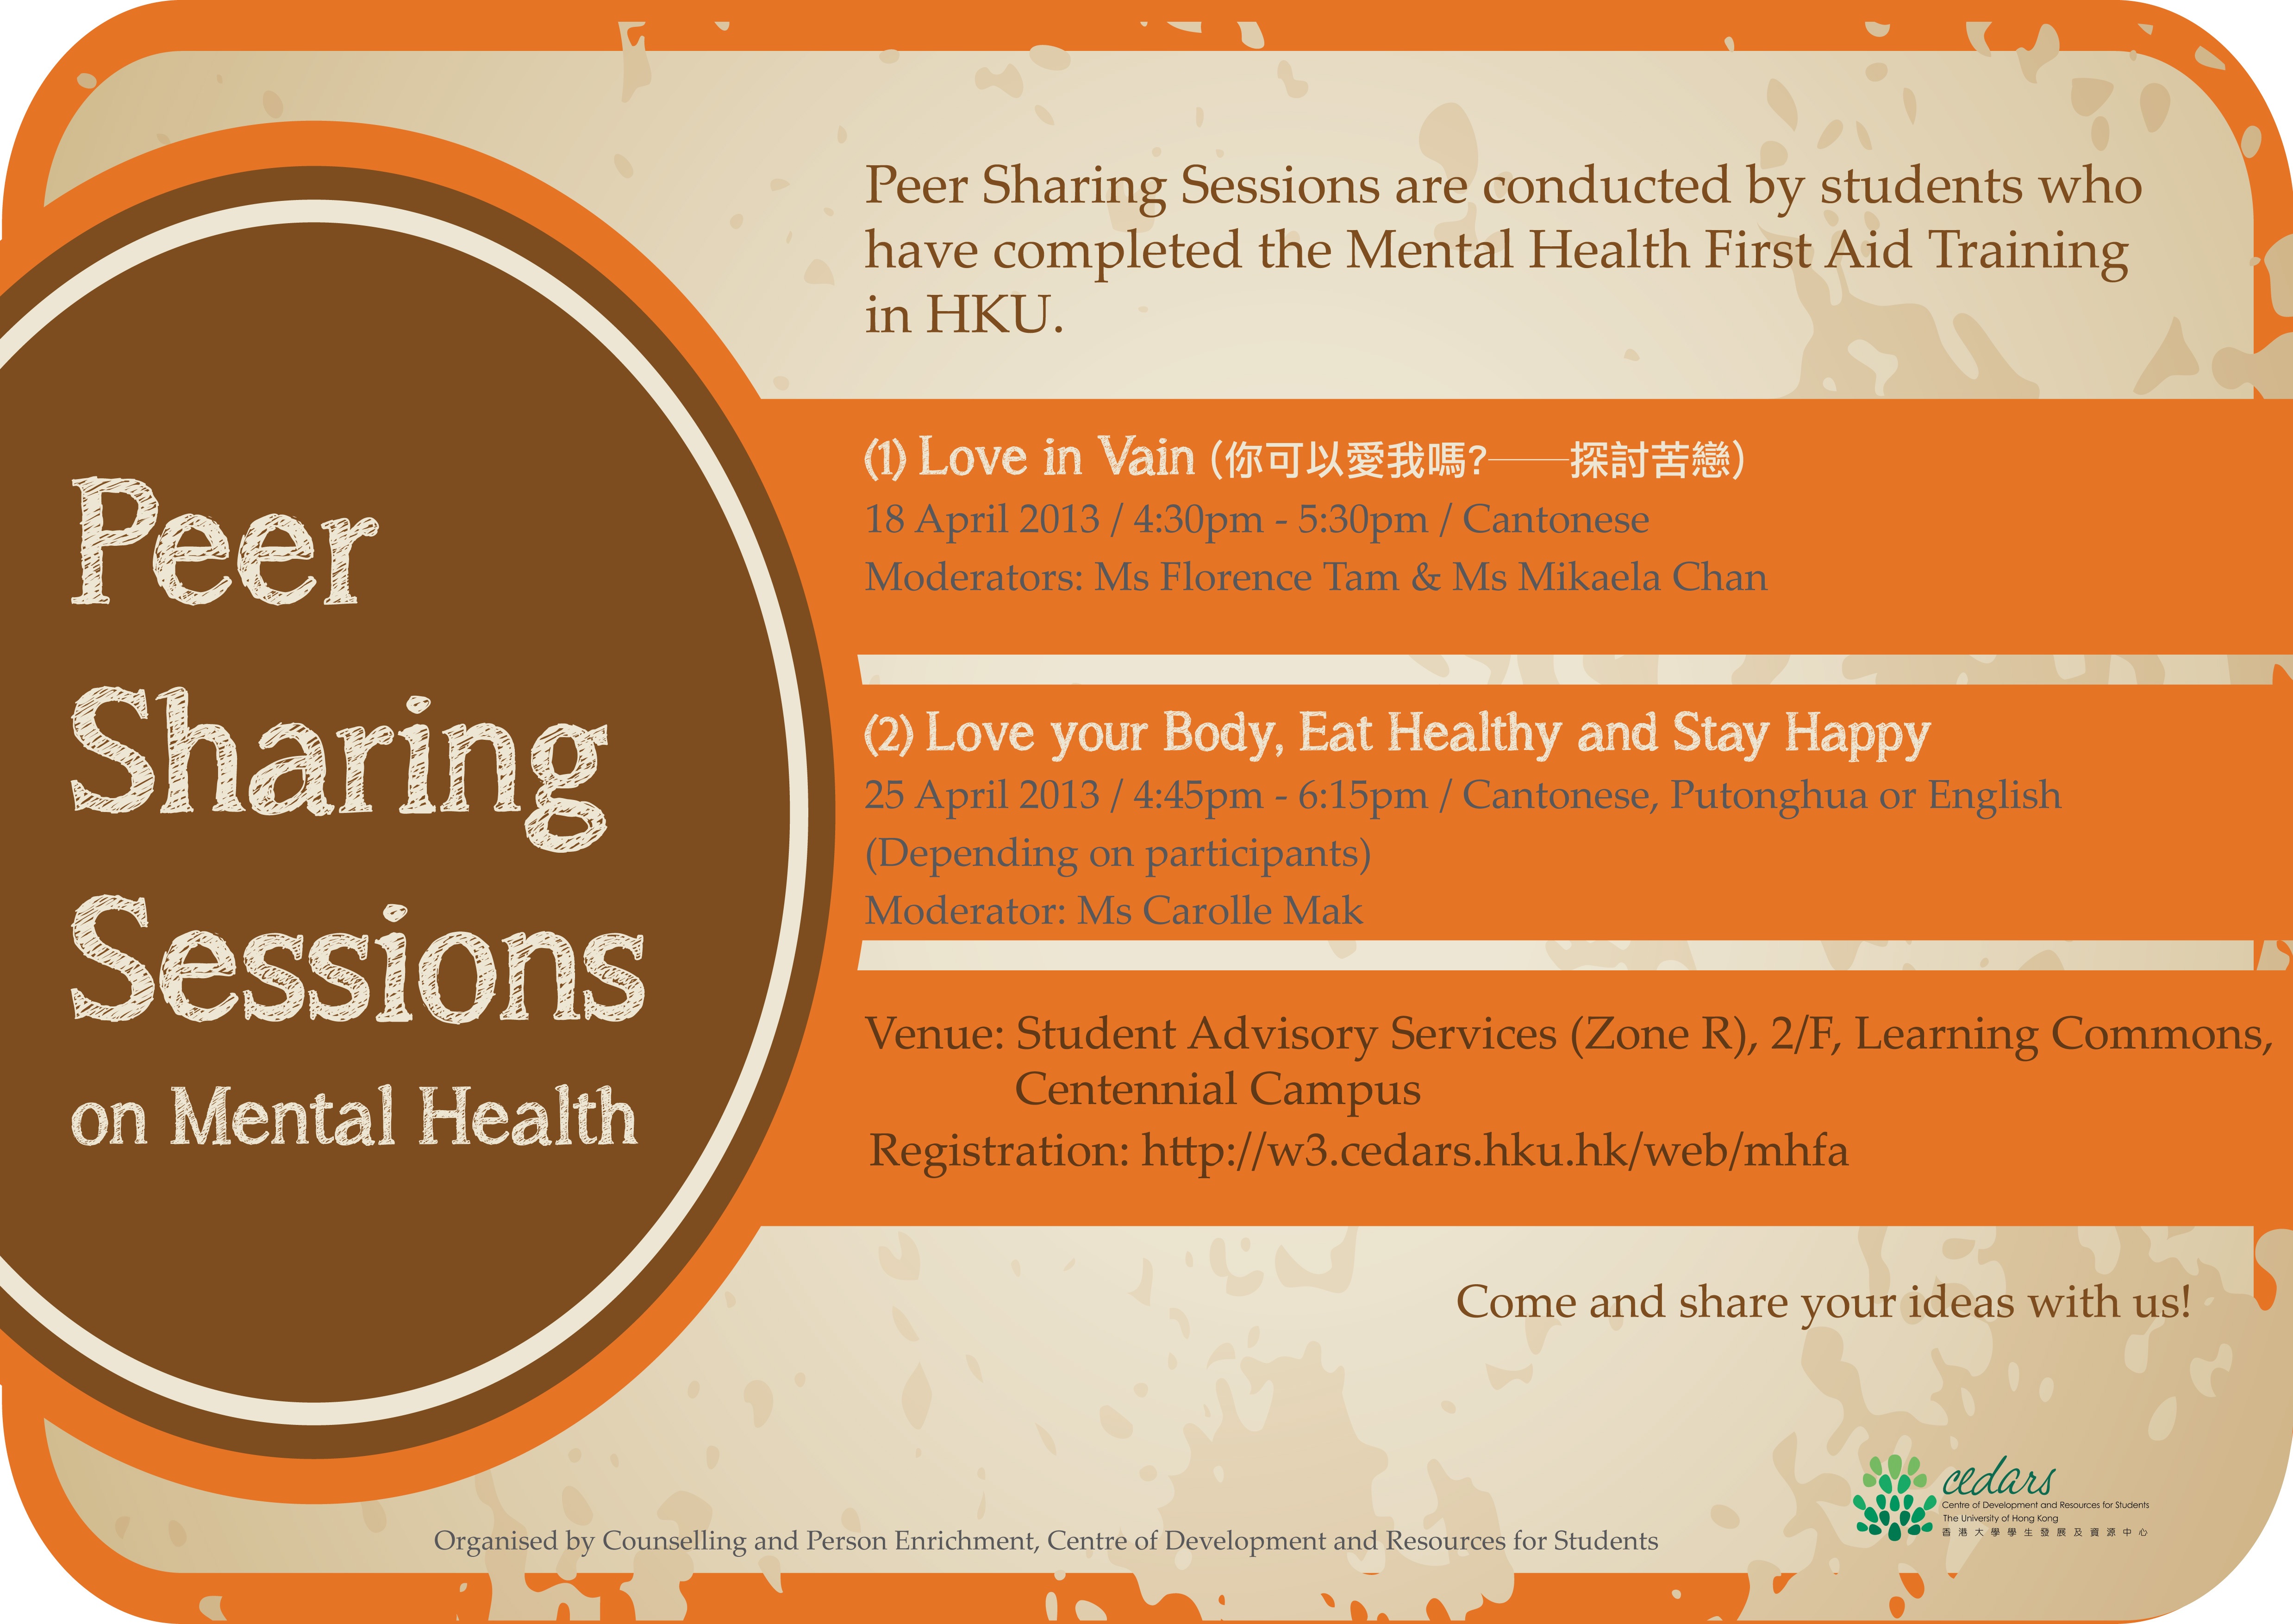 Peer Sharing Sessions on Mental Health